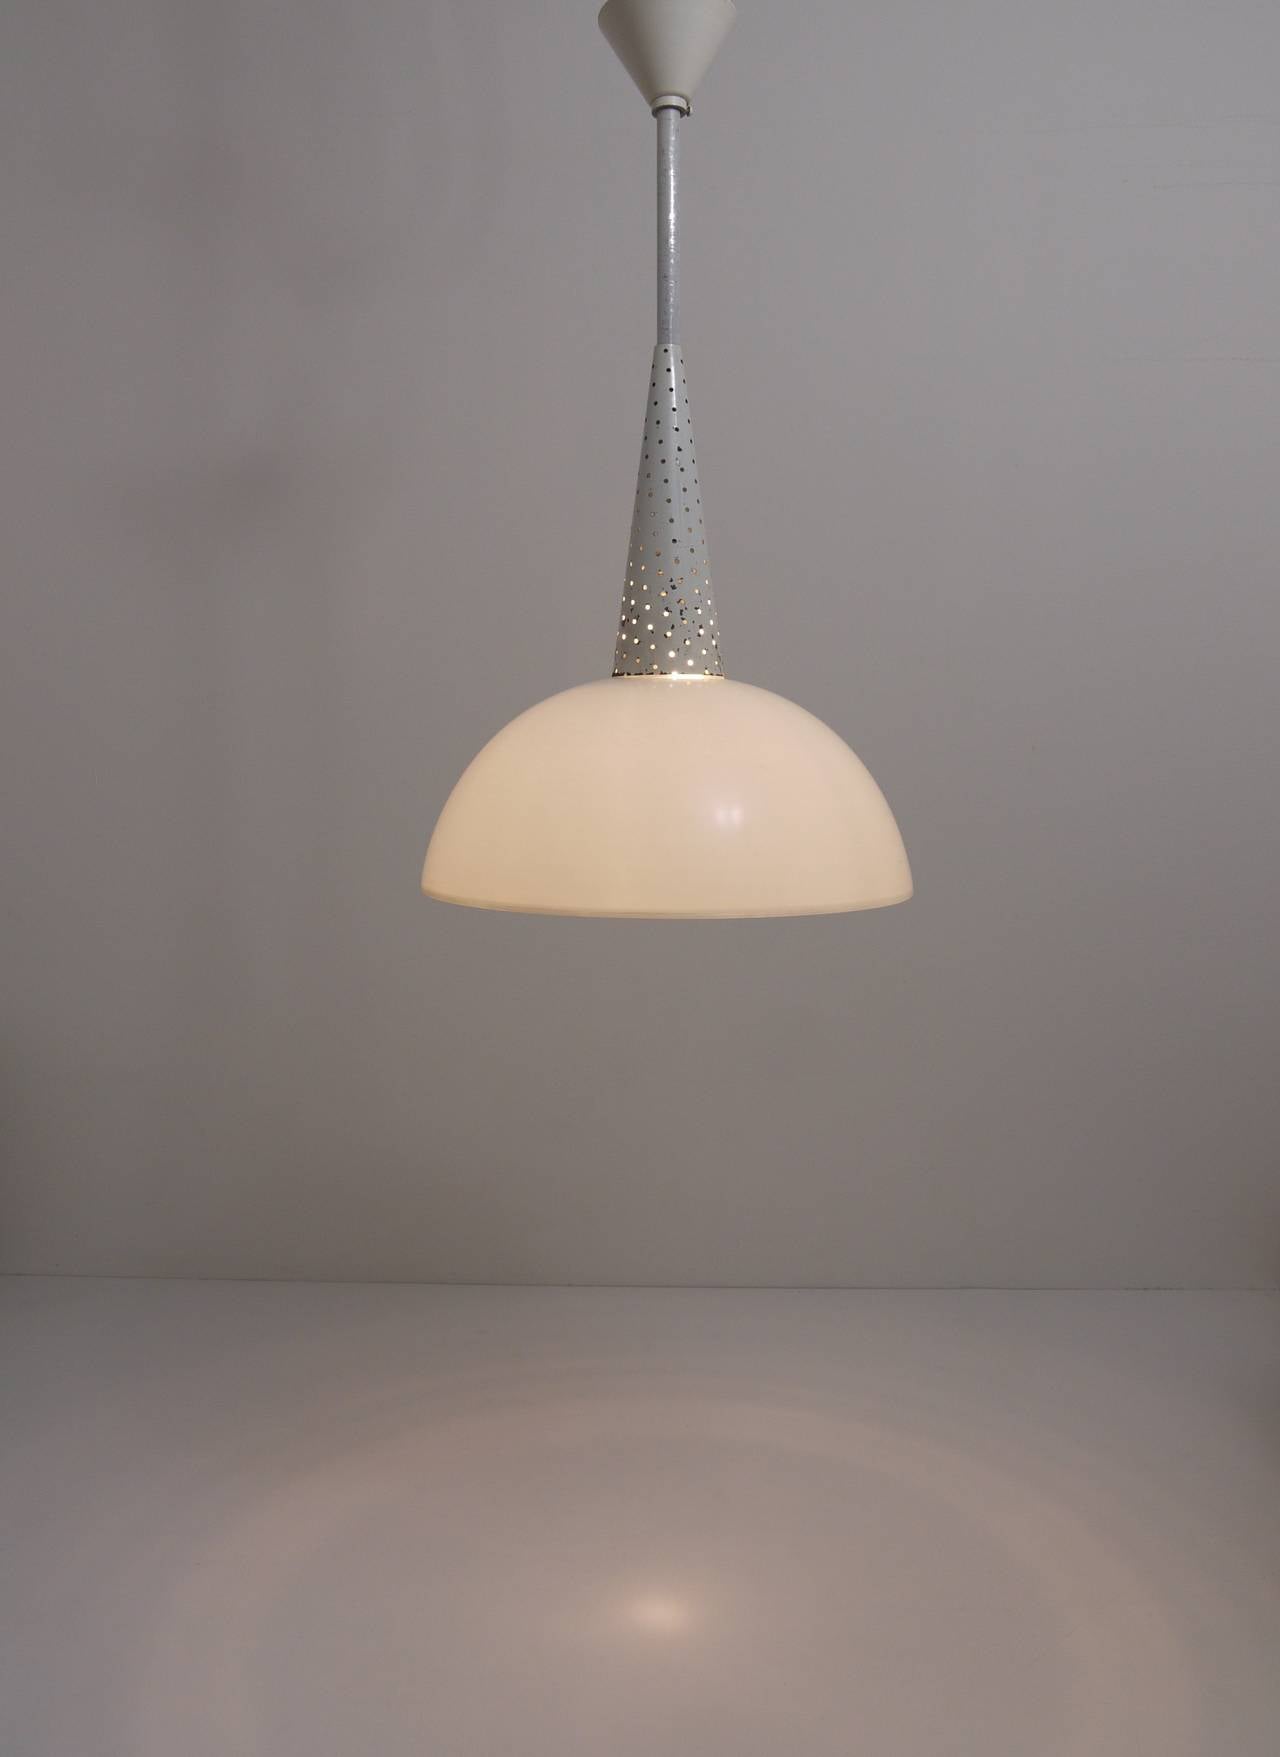 Metal Mathieu Matégot Perforated Midcentury Pendant Lamp, Holophane, France, 1950s For Sale